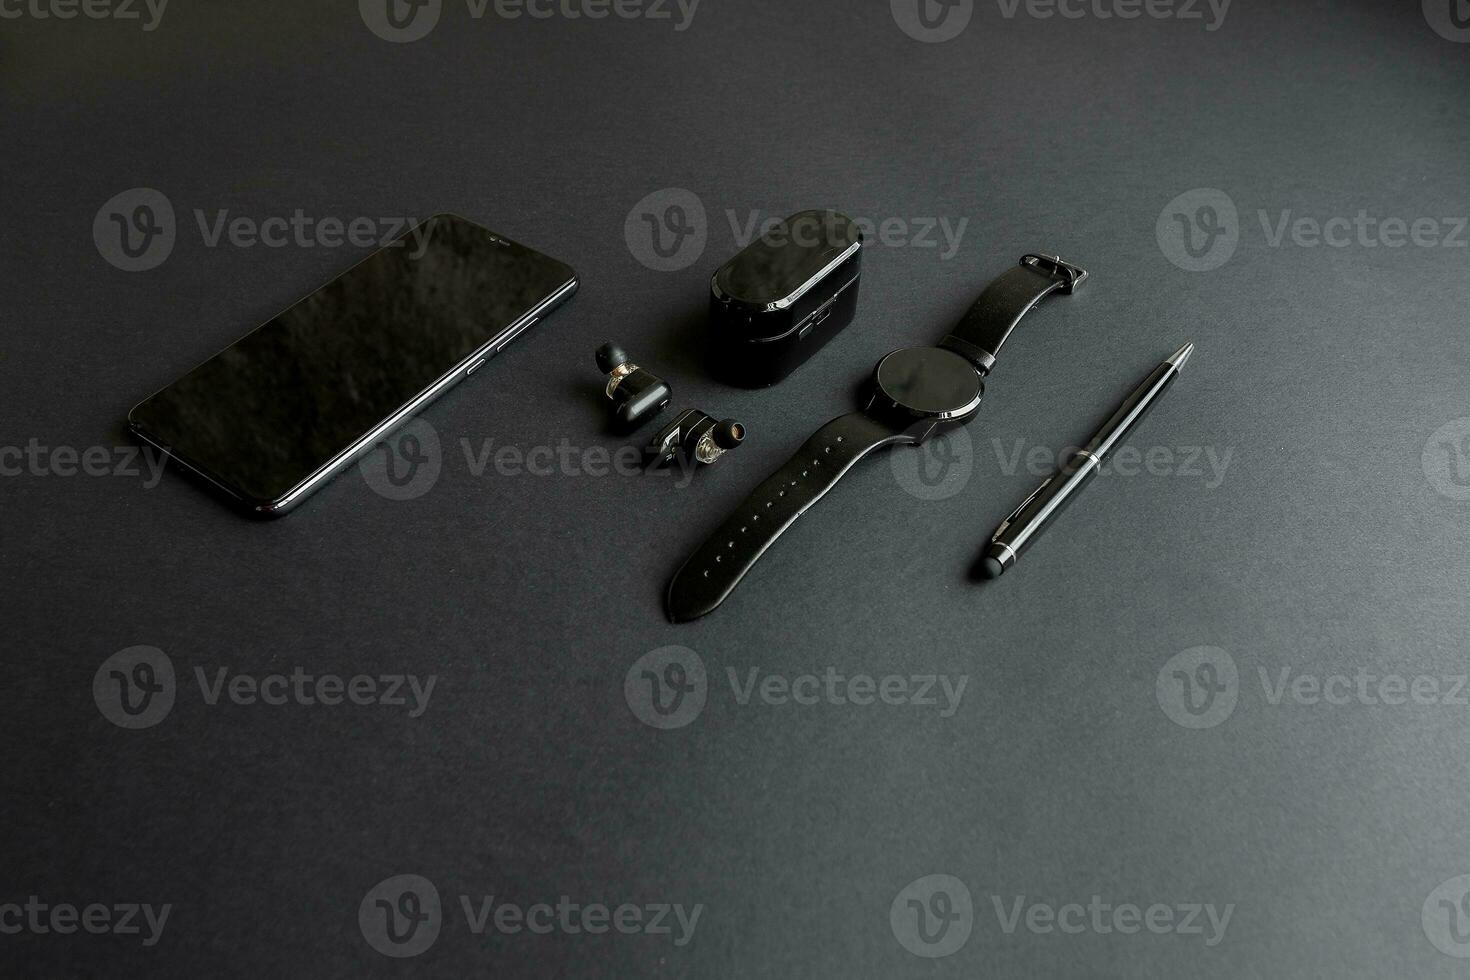 black pen, black smart watch, smartphone, wireless headphones on dark background photo